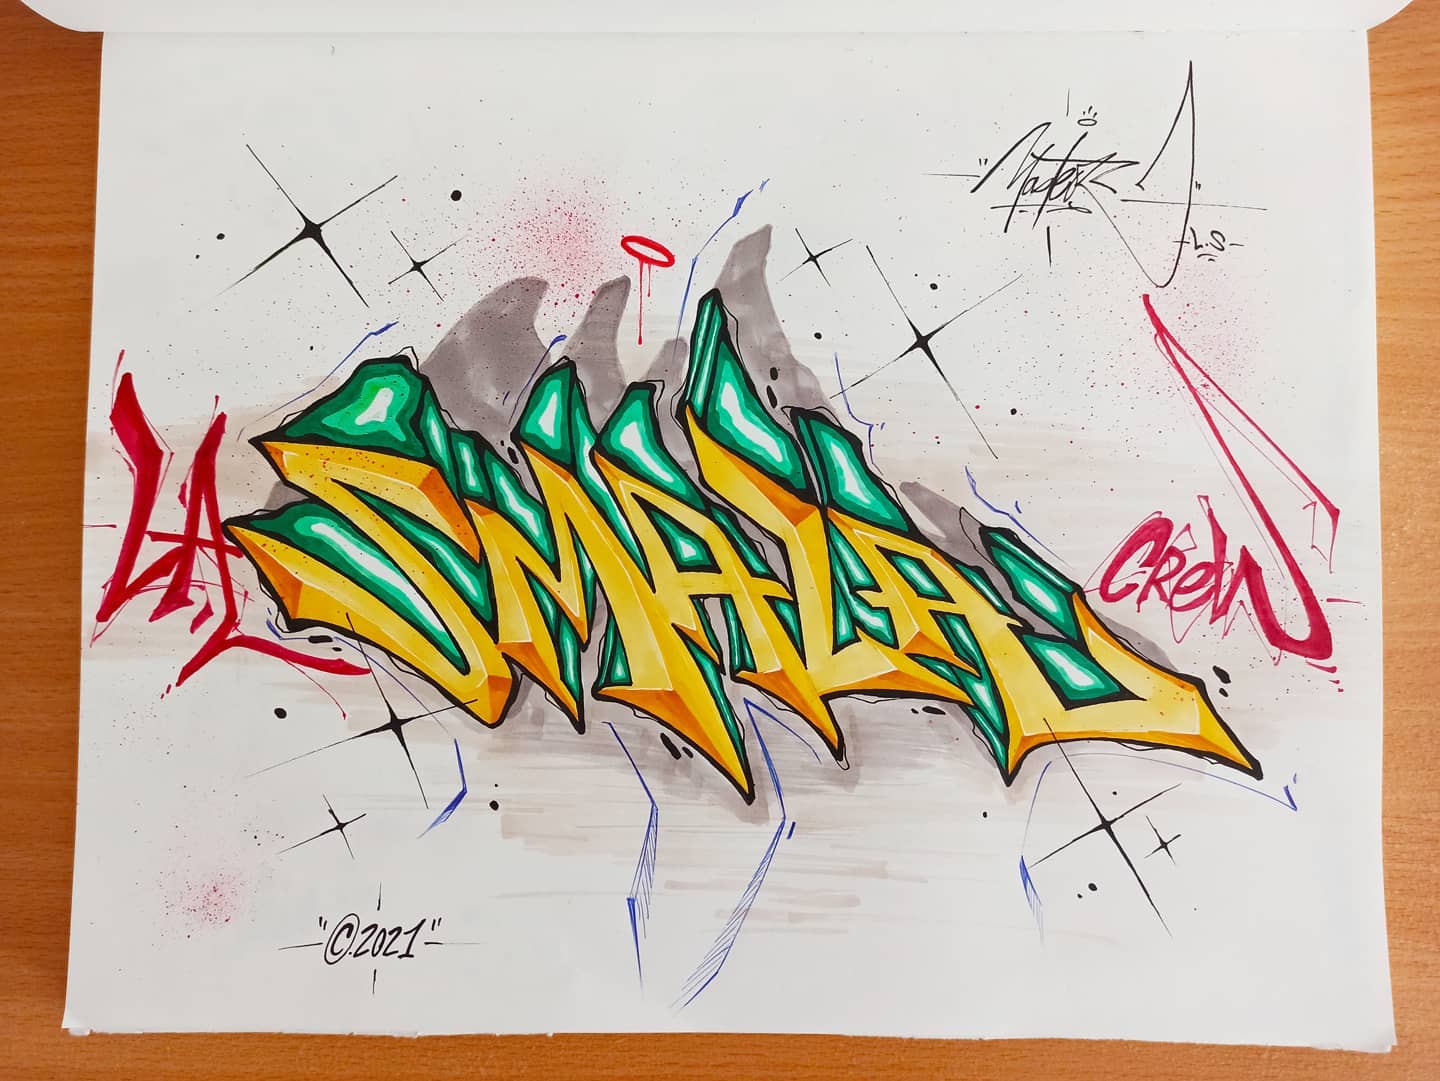 Dessin style tag par le graffeur Naster, " La Smala Crew"